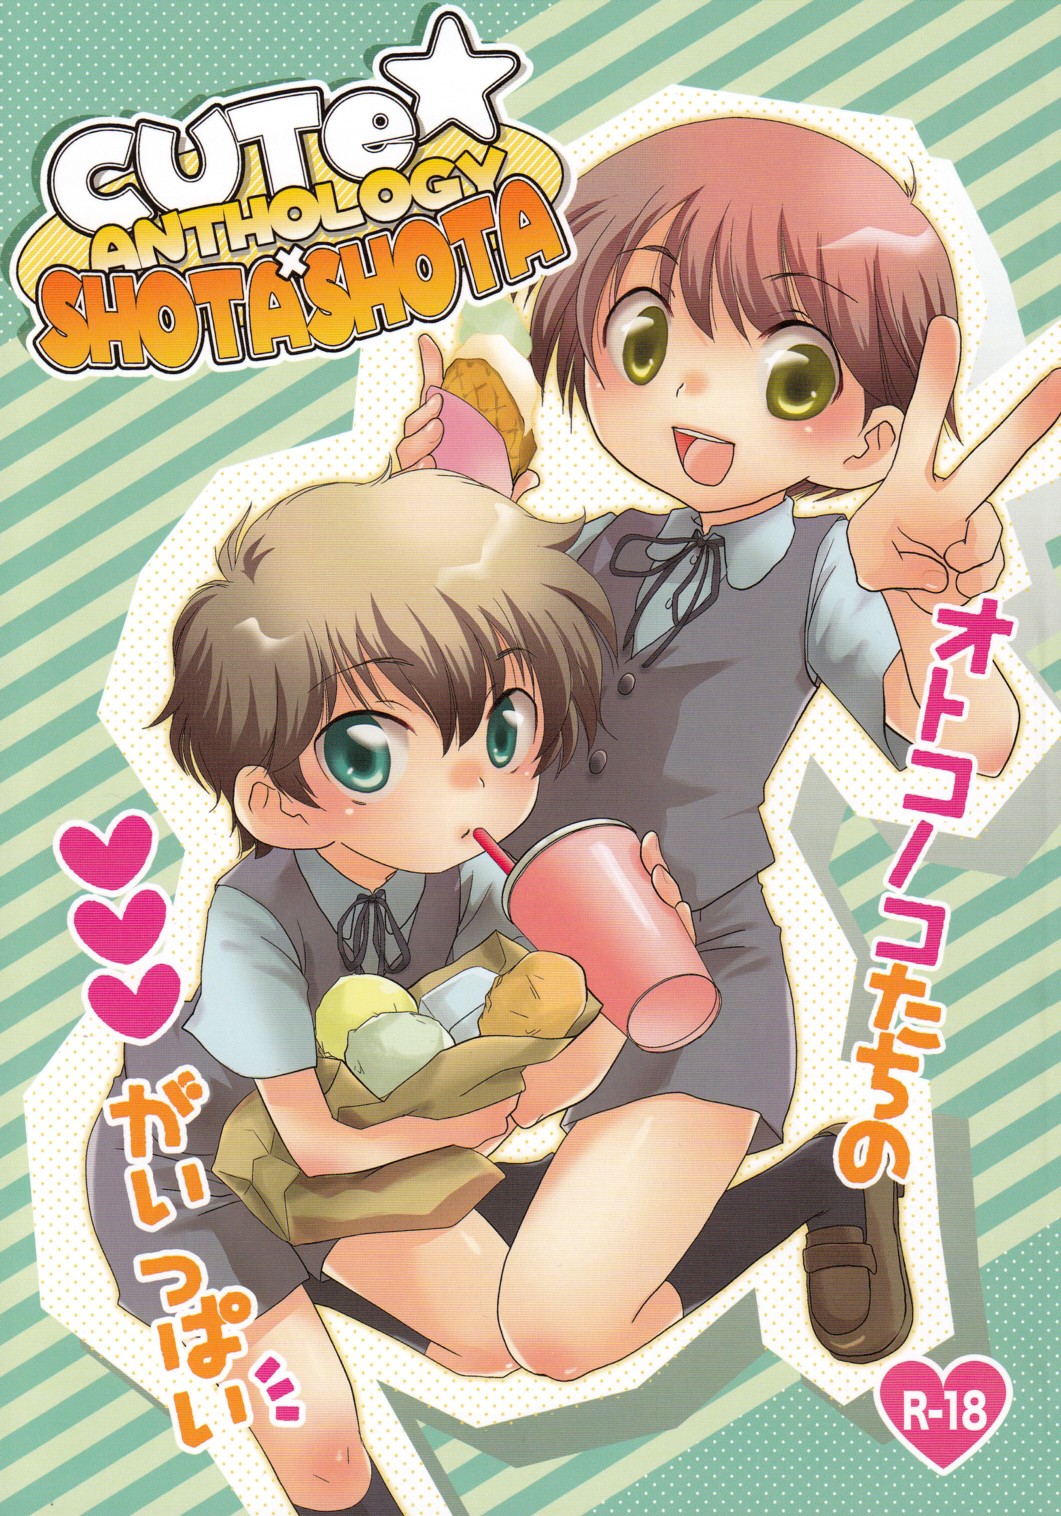 Www Xxx Video Shota Shota - Cute Anthology Shota x Shota - Page 1 - HentaiEra